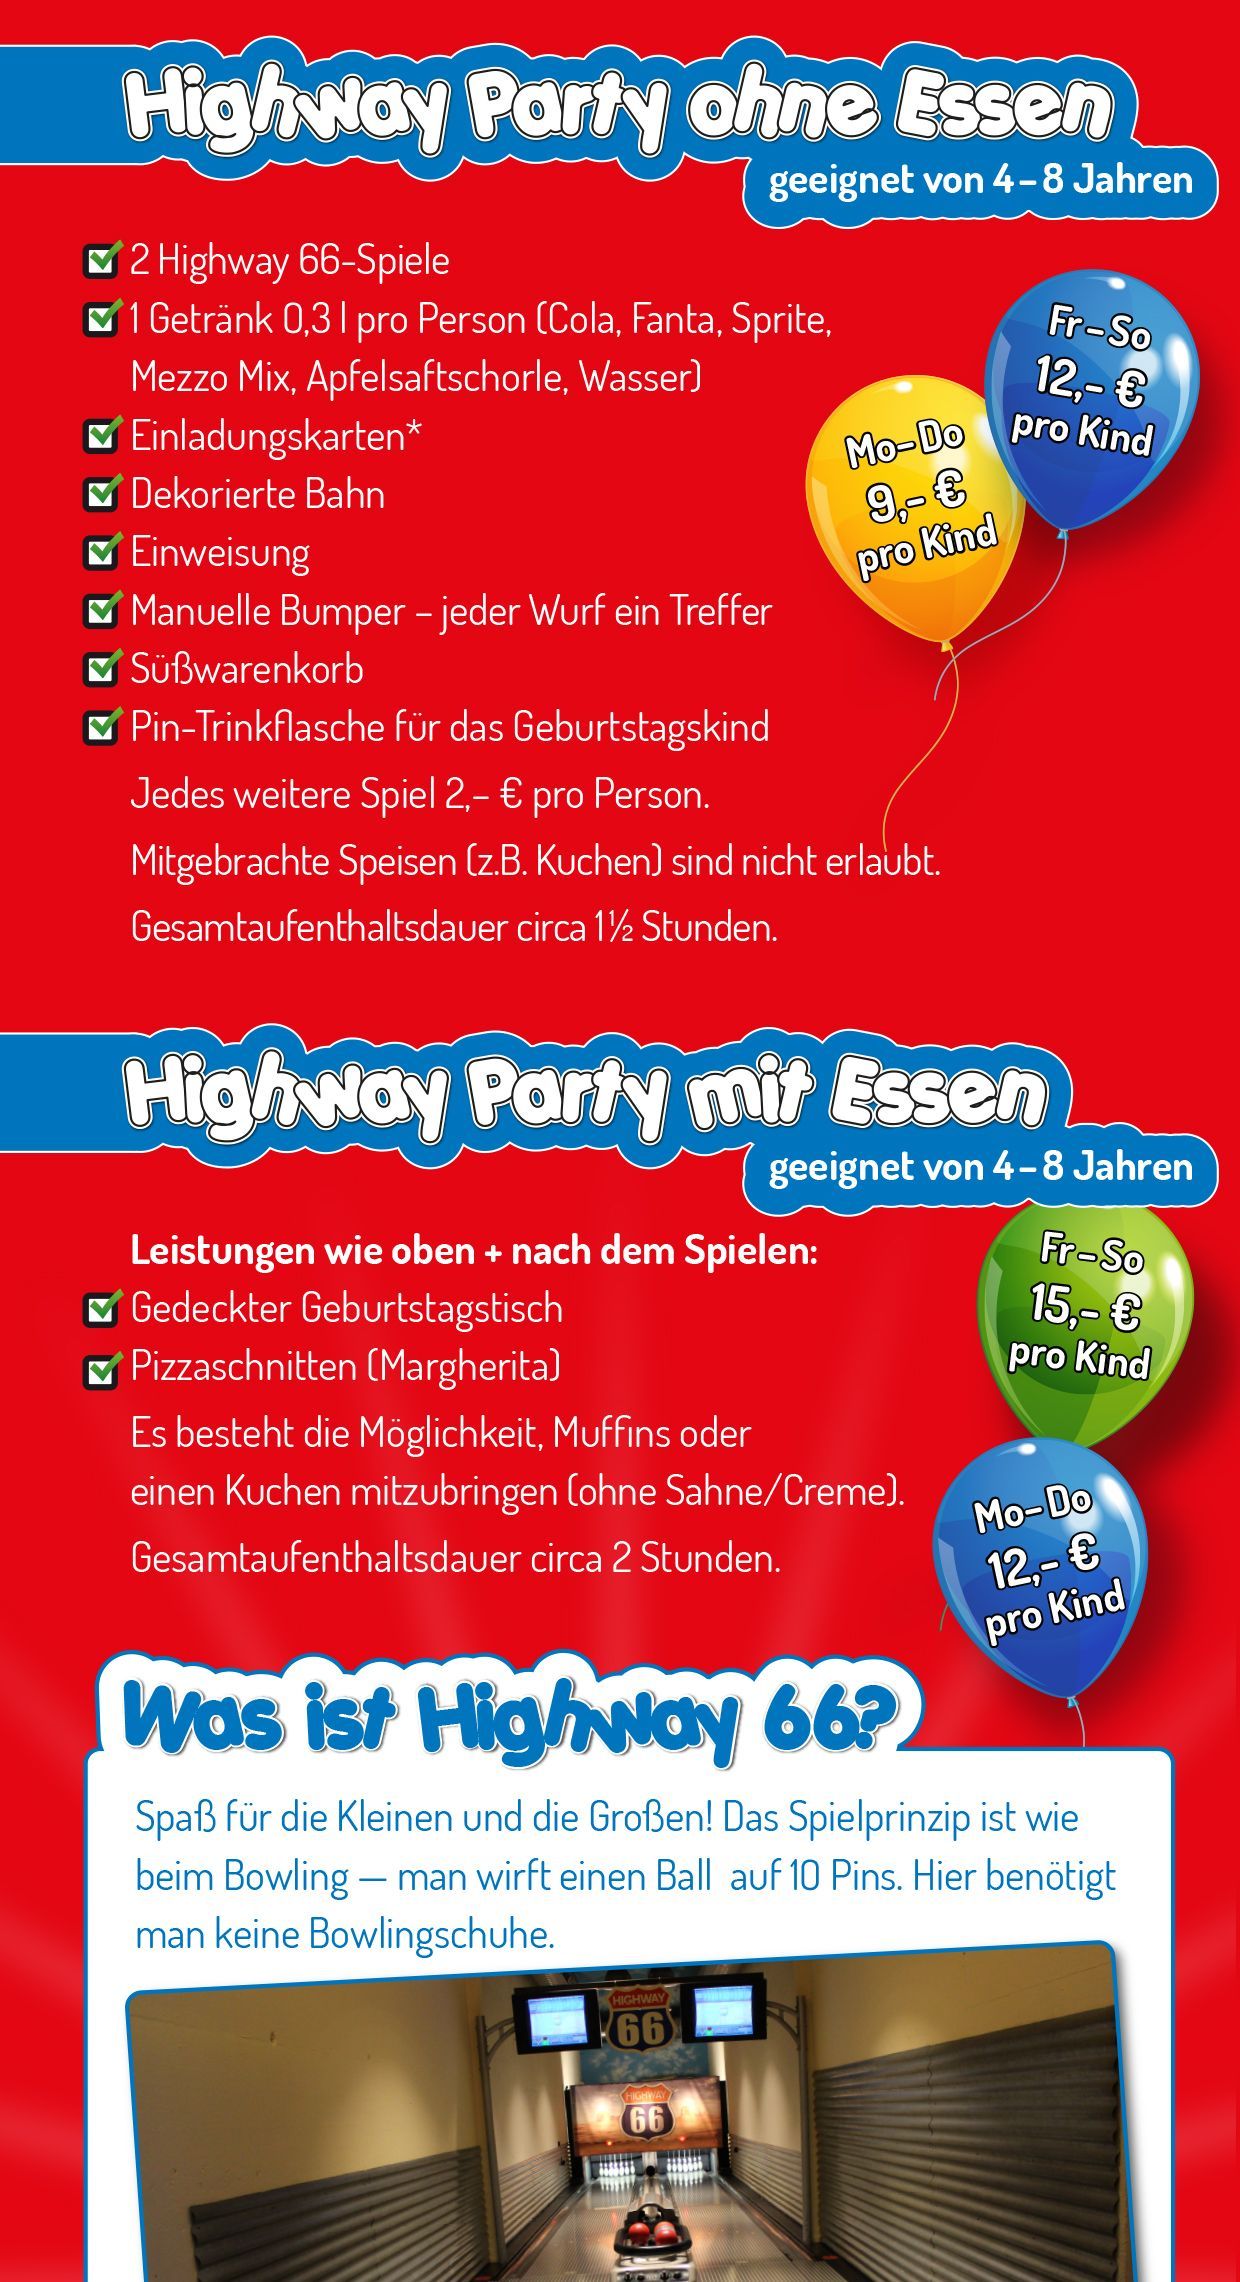 Highway Party im City Bowling Reutlingen